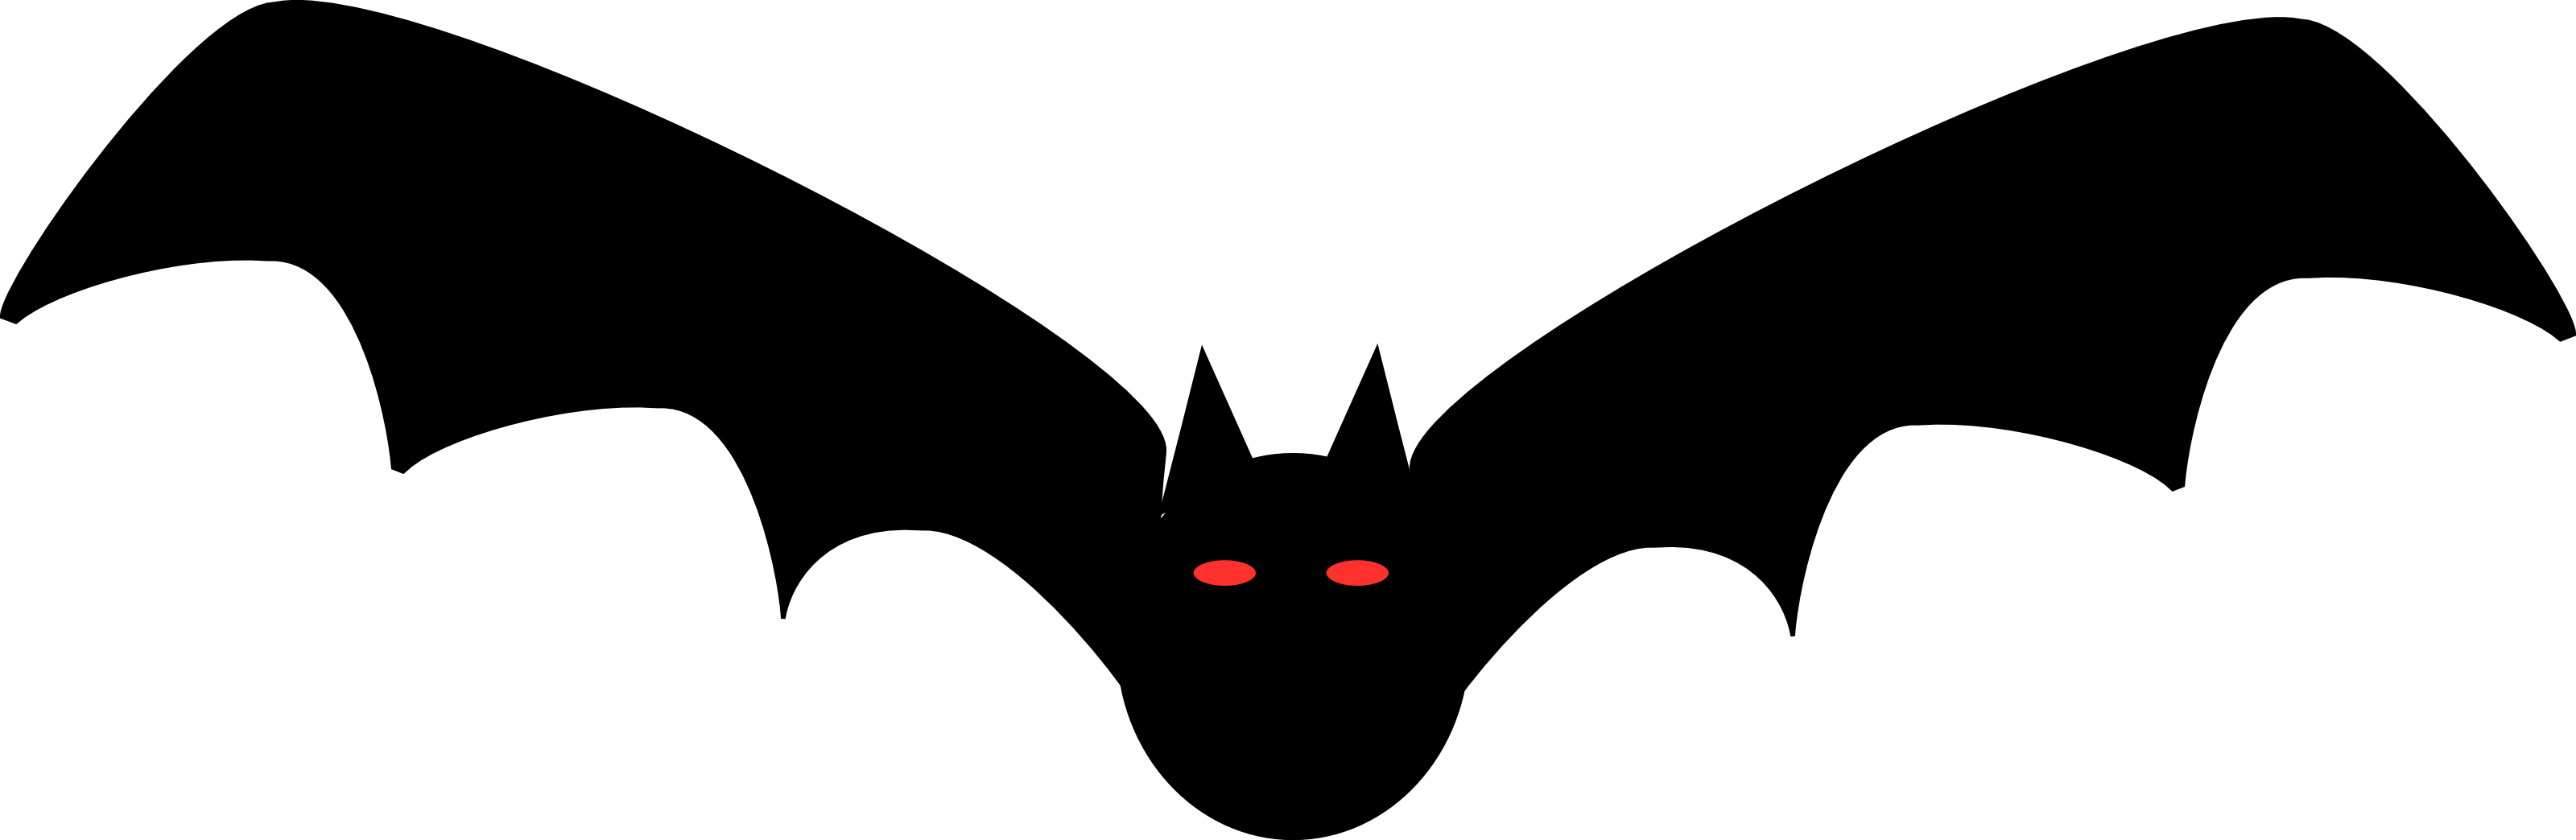 Images For  Vampire Bat Silhouette